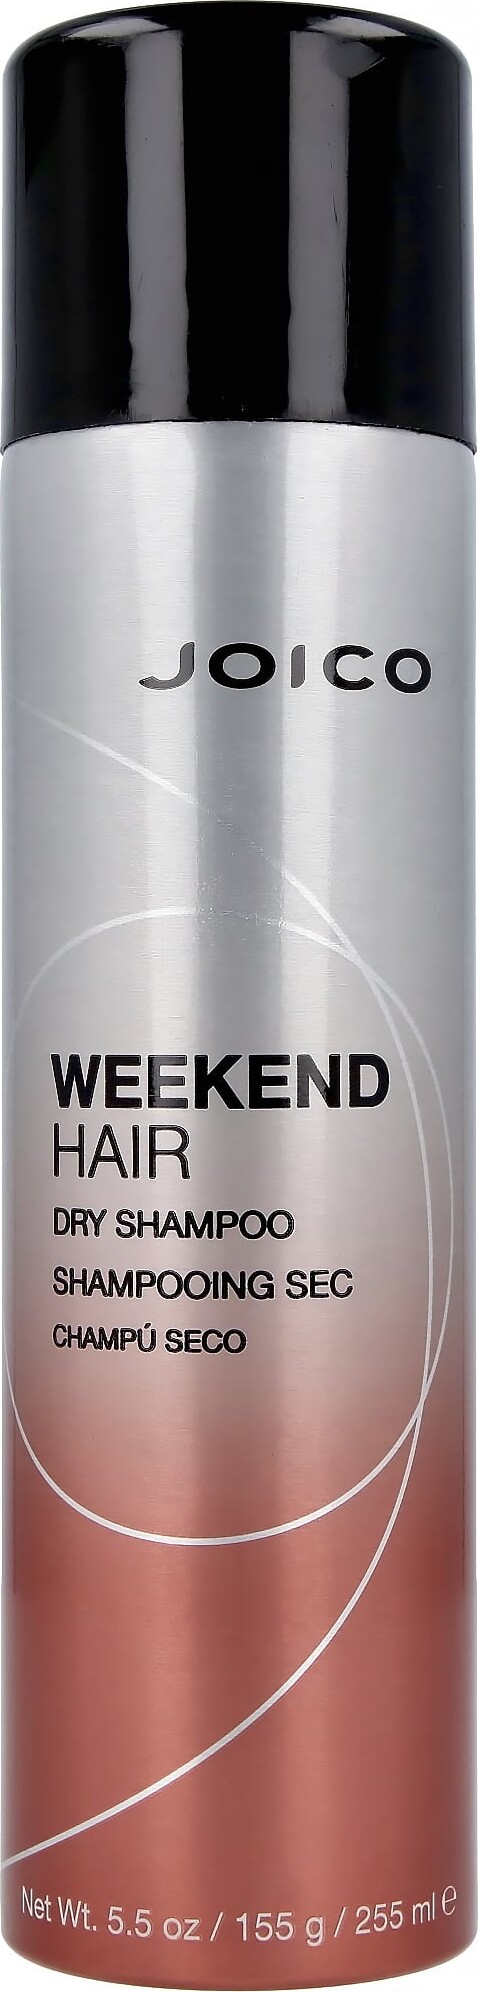 Se Joico - Weekend Hair Dry Shampoo 255 Ml hos Gucca.dk